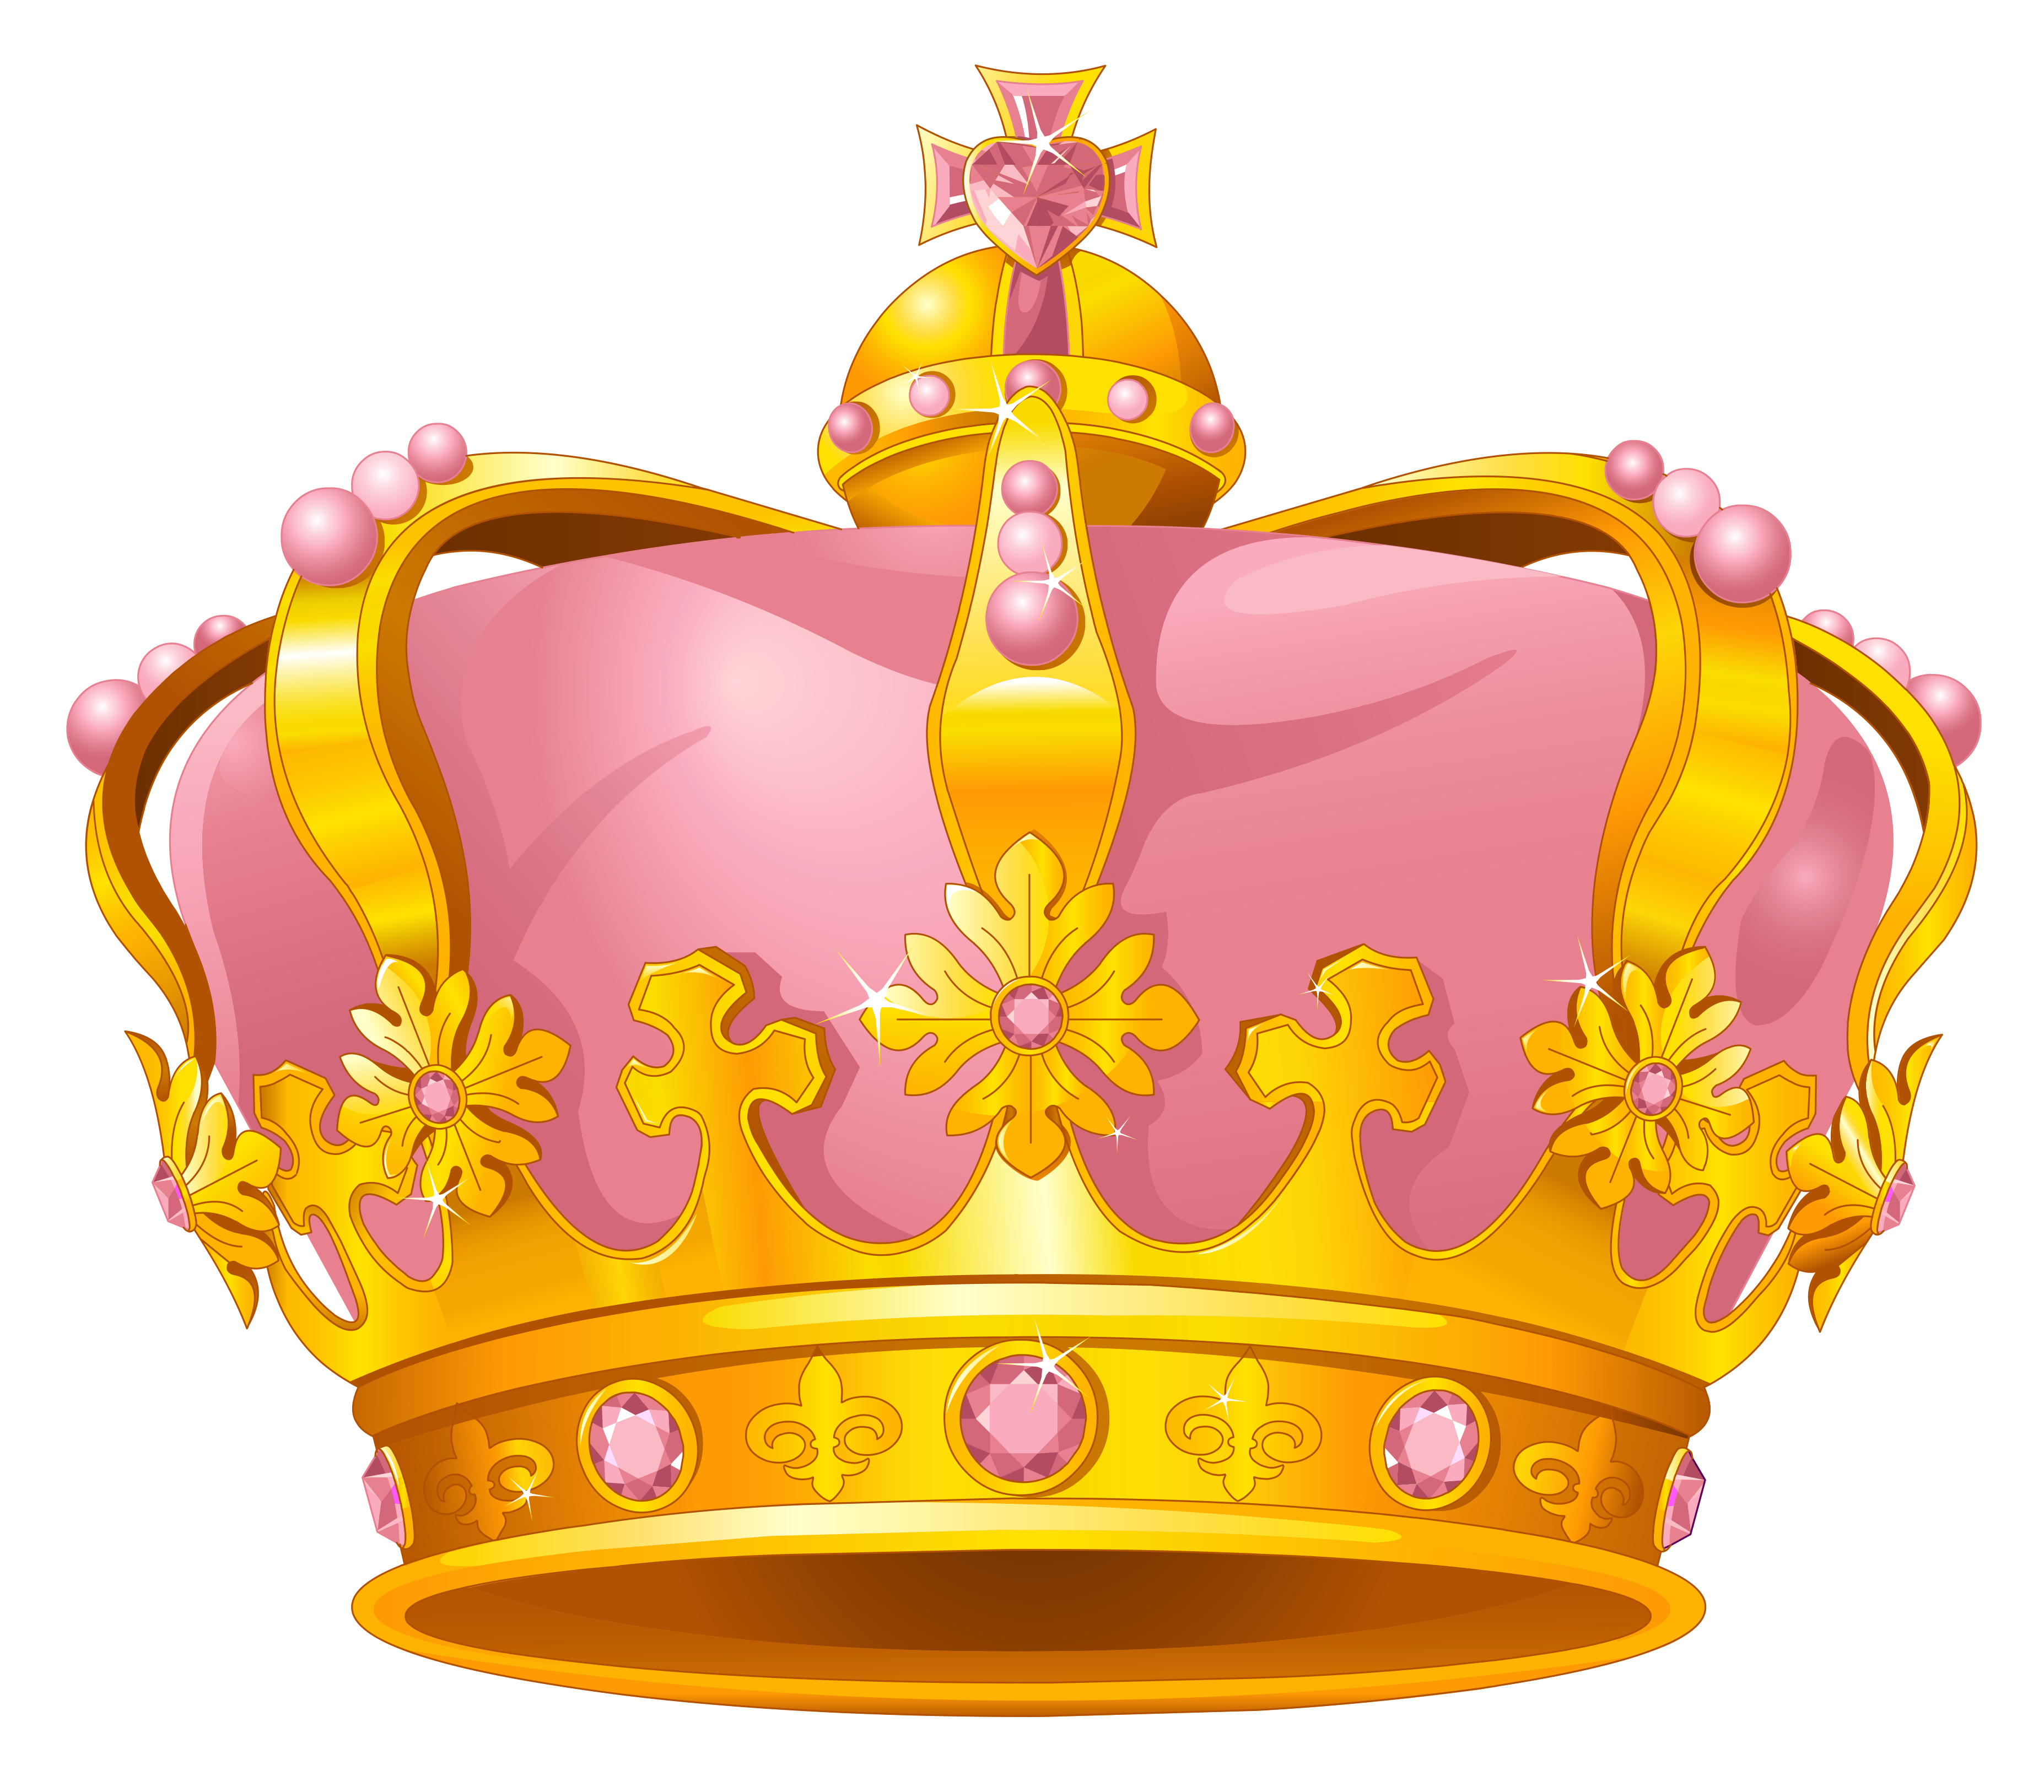 Golden Crown PNG Image.